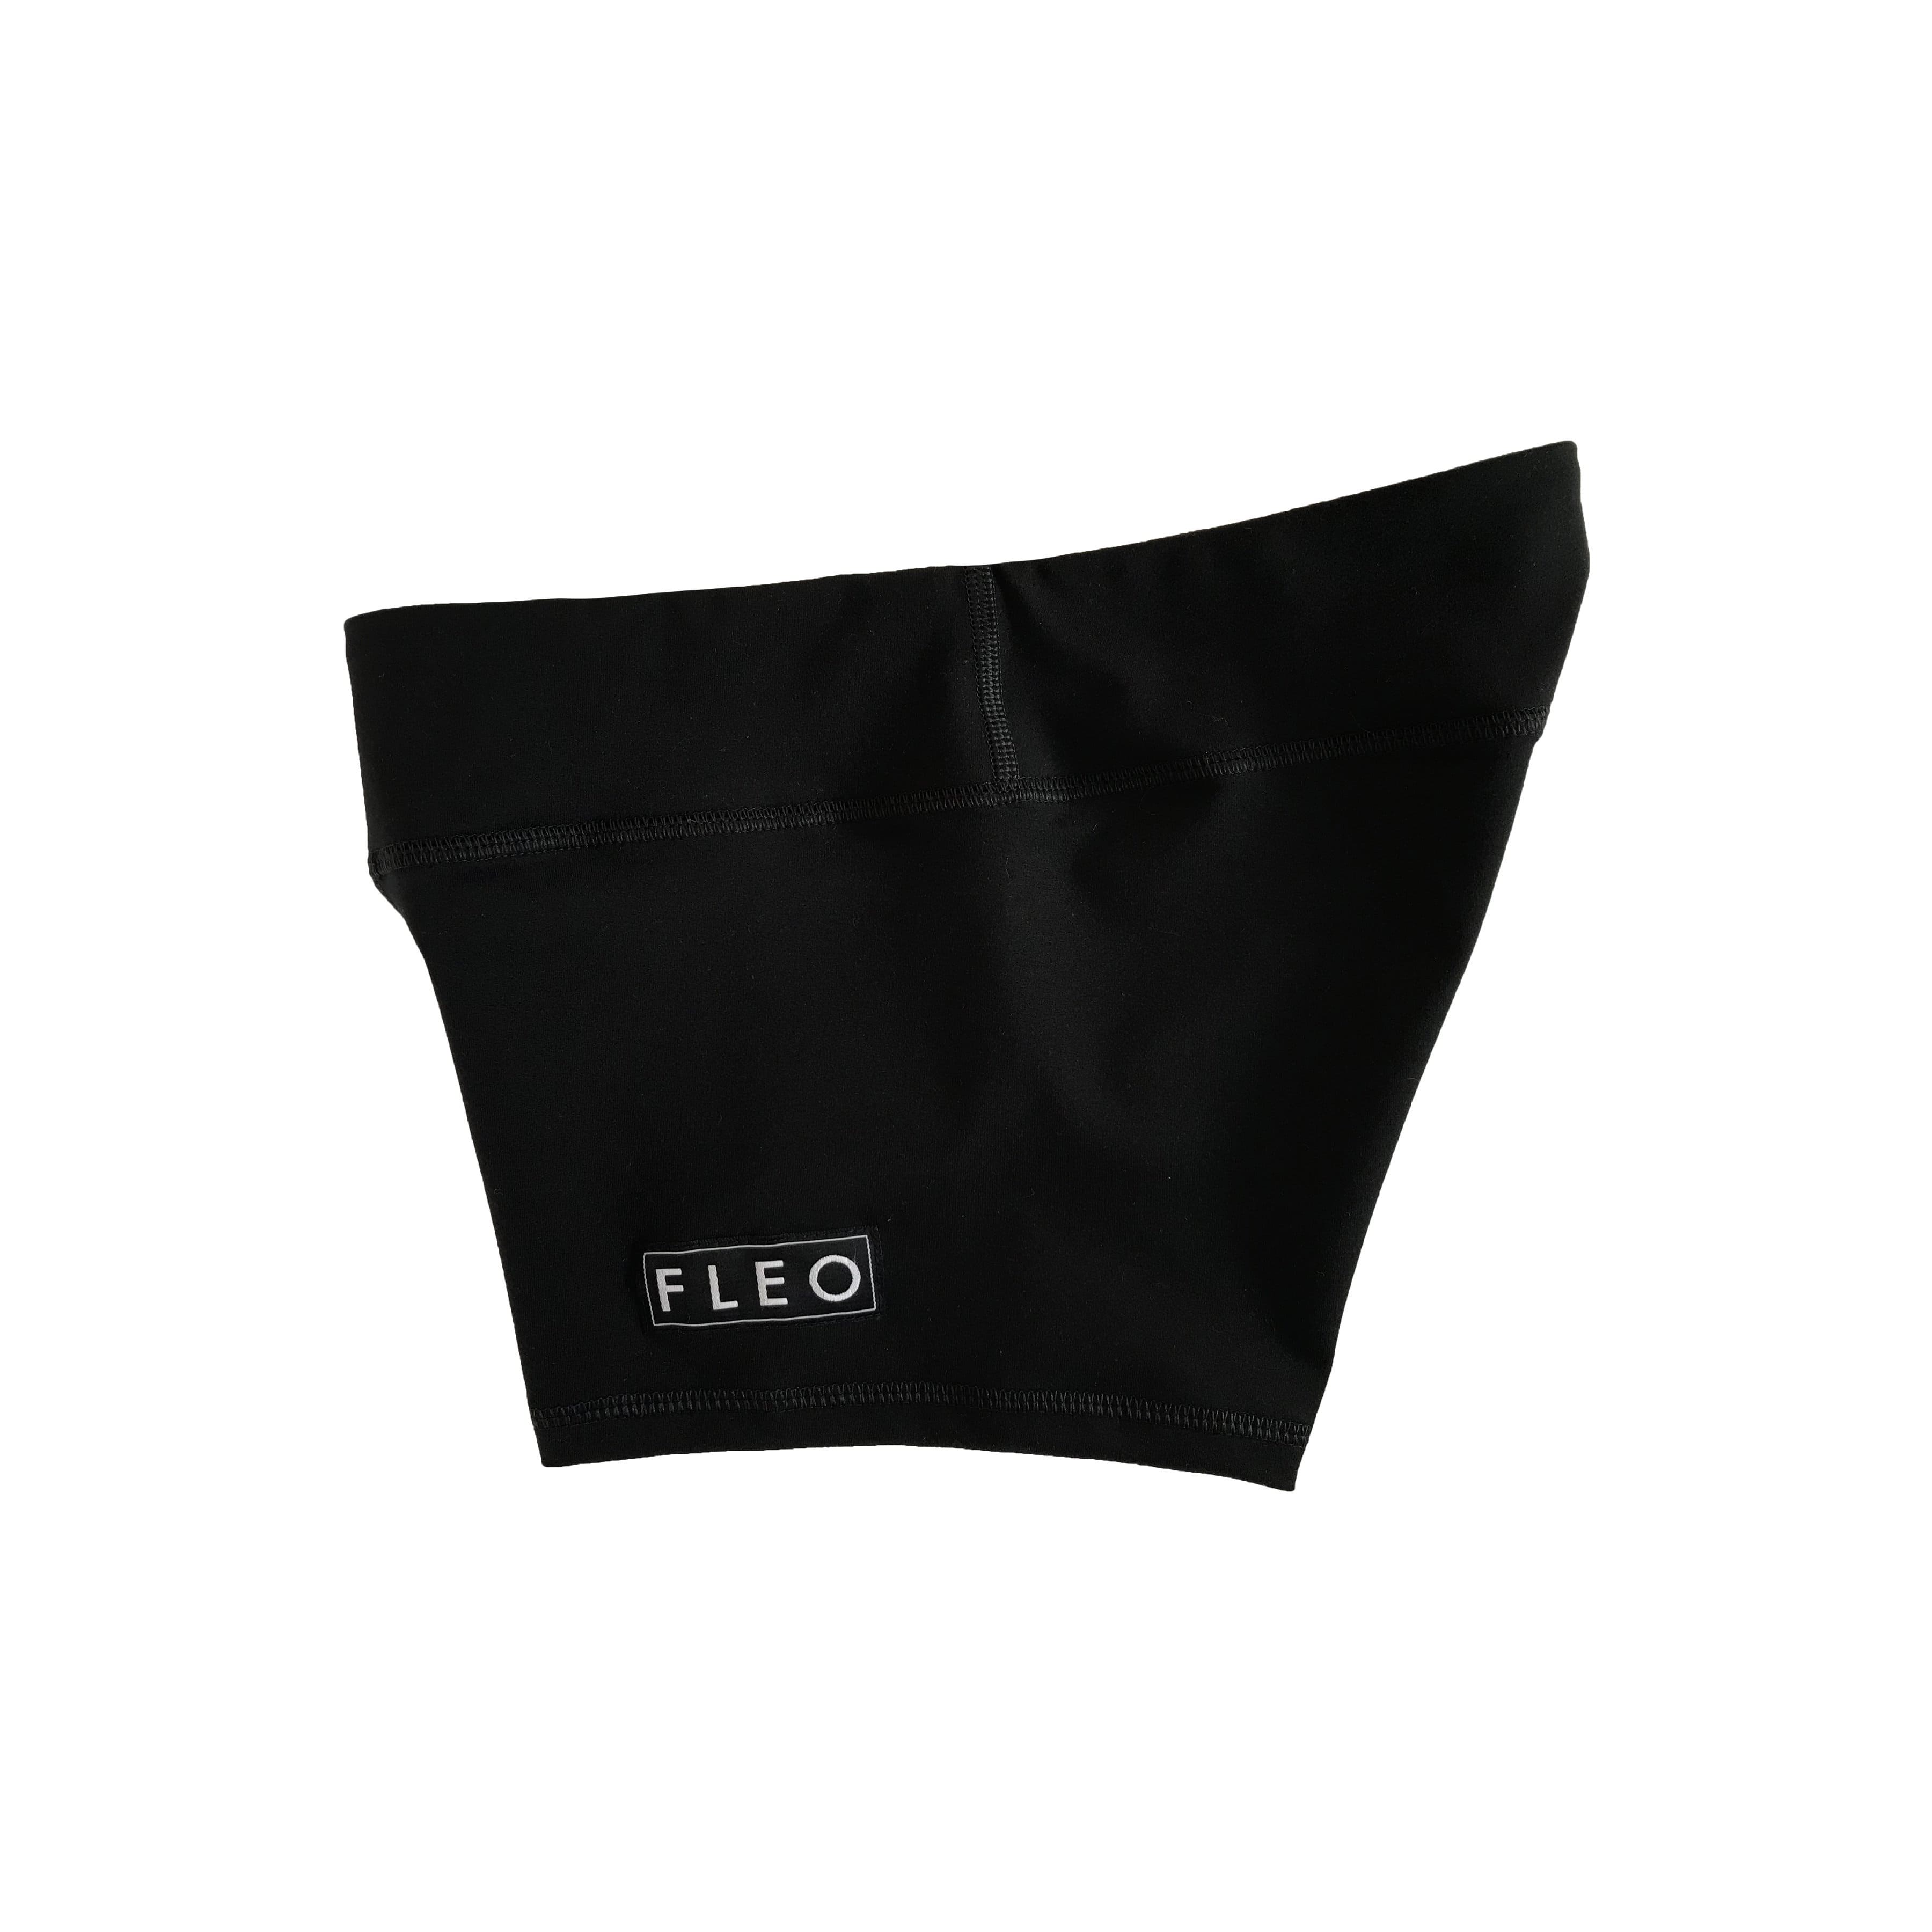 Fleo Leggings El Toro 25” Bounce Material Size Medium Orange